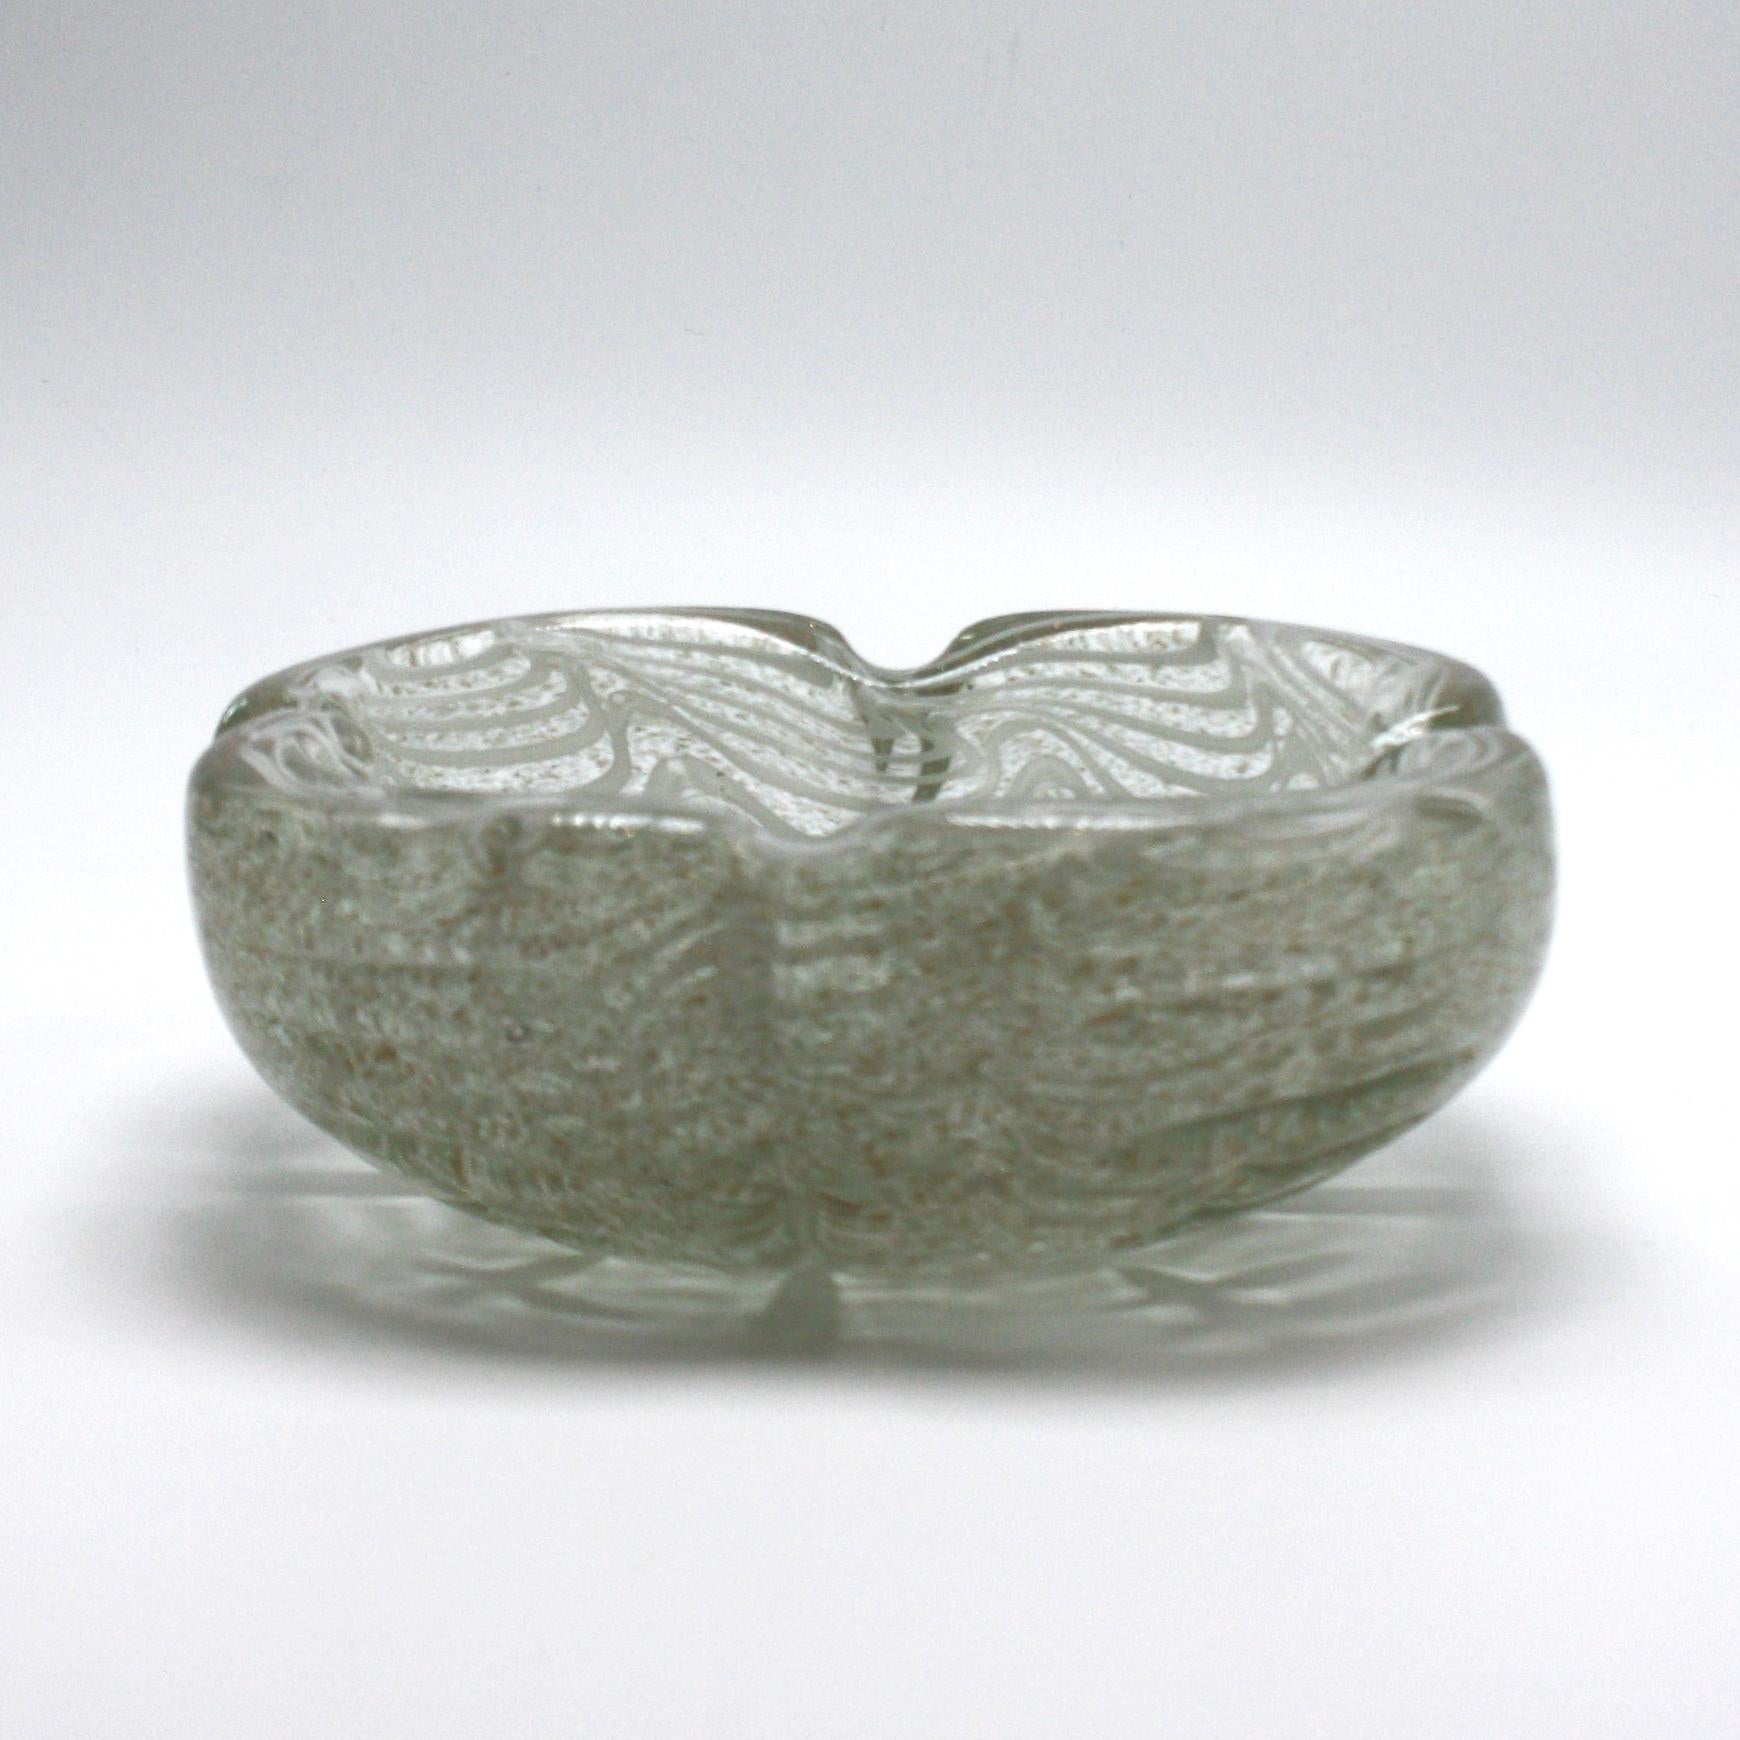 Gold and white Murano glass bowl, circa 1950.
Measures: 6 1/2” diameter x 2” height.